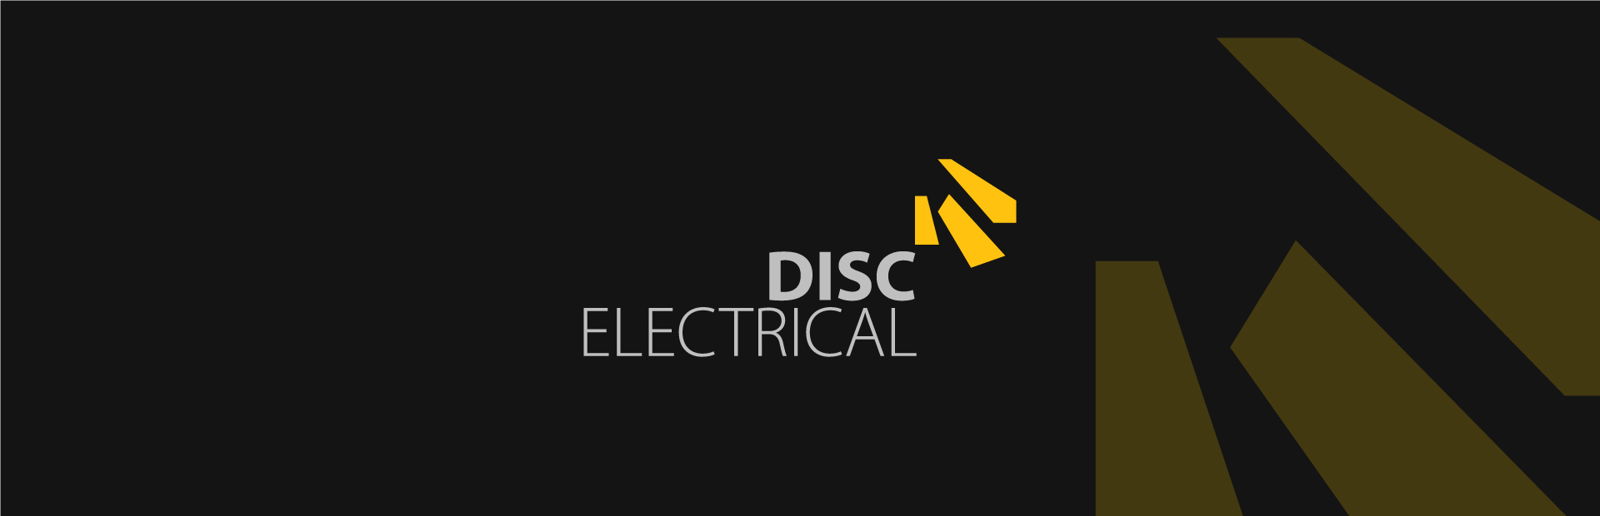 DISC Electrical - Website Design Client of SmartaStudio's